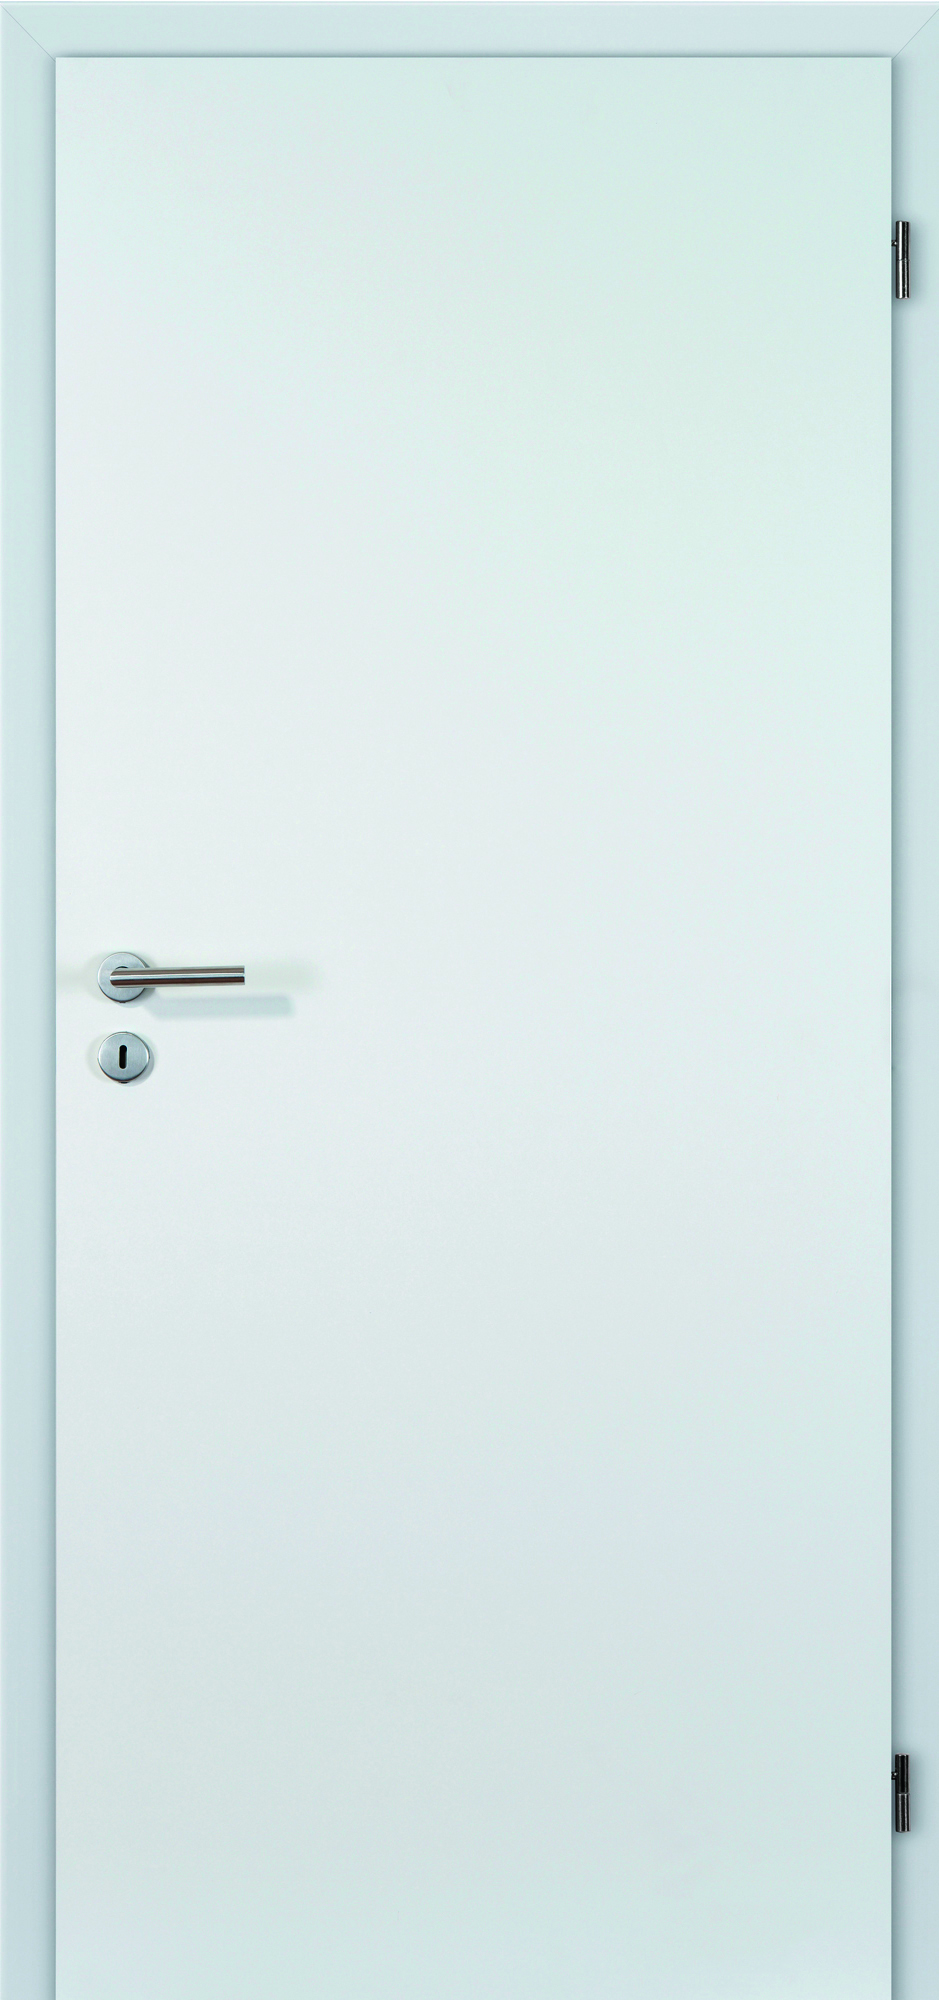 Dveře interiérové protipožární Doornite LUME EXTRA CPL bílá pravá 900 mm